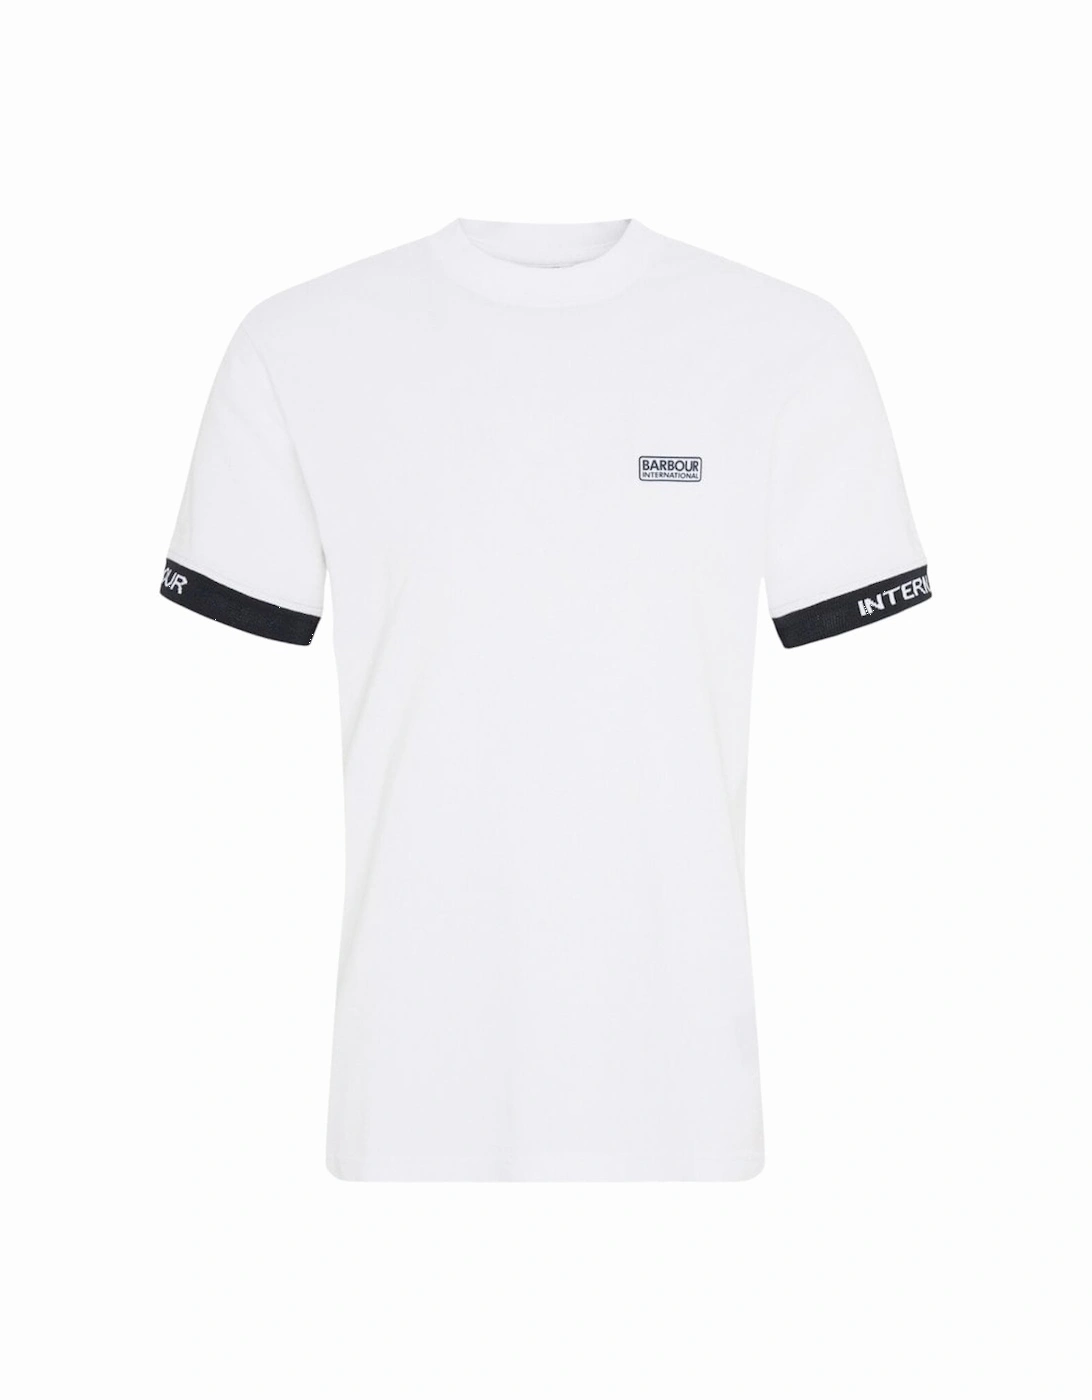 Heim T-Shirt - White